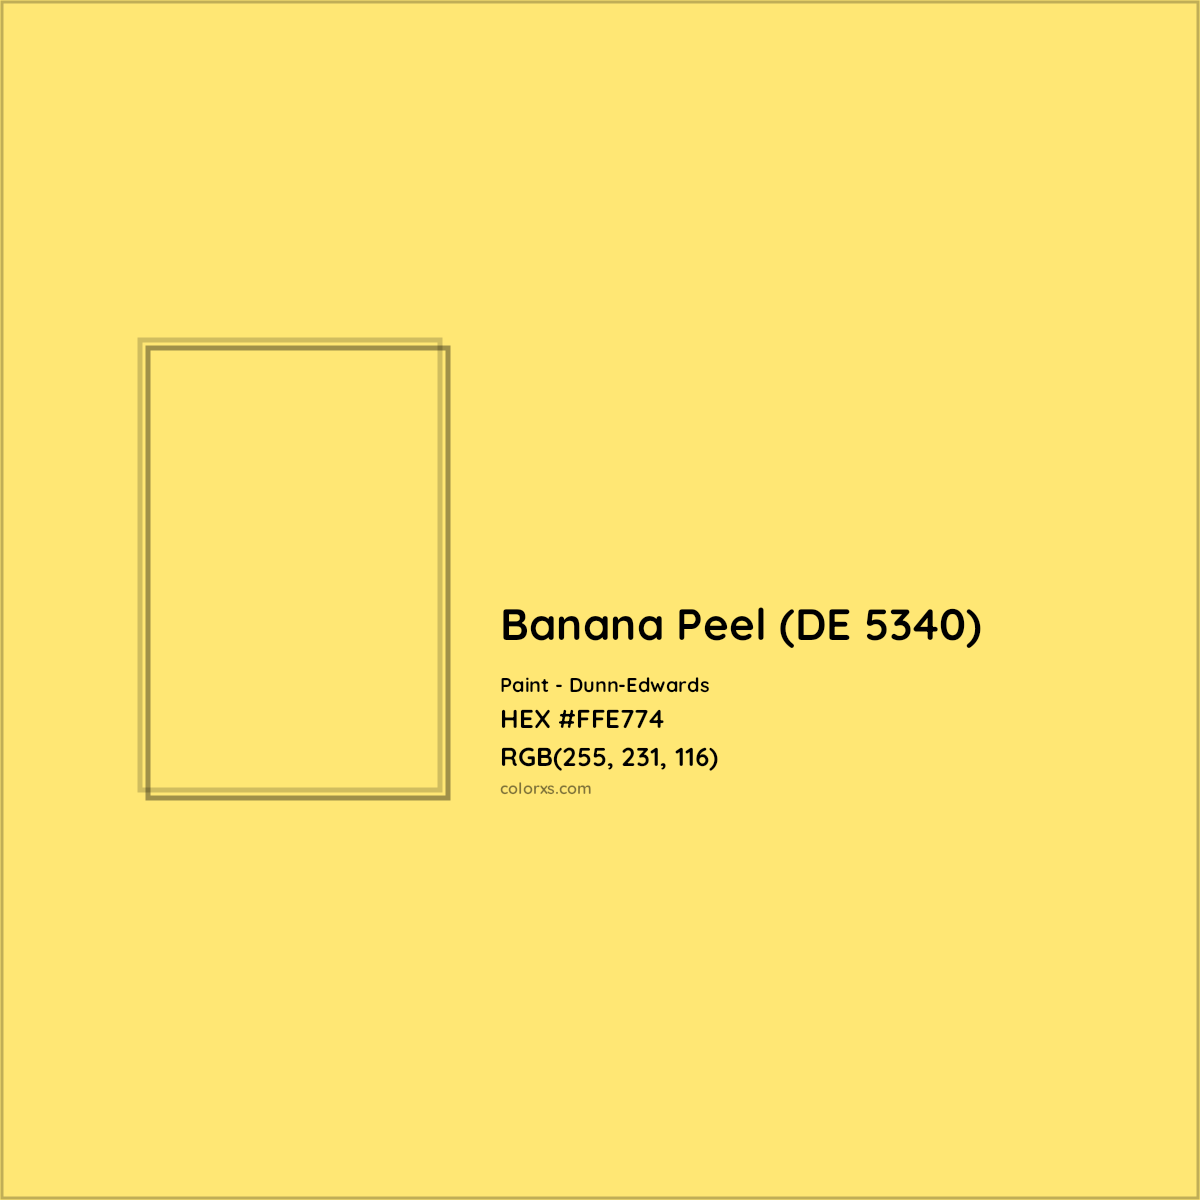 HEX #FFE774 Banana Peel (DE 5340) Paint Dunn-Edwards - Color Code